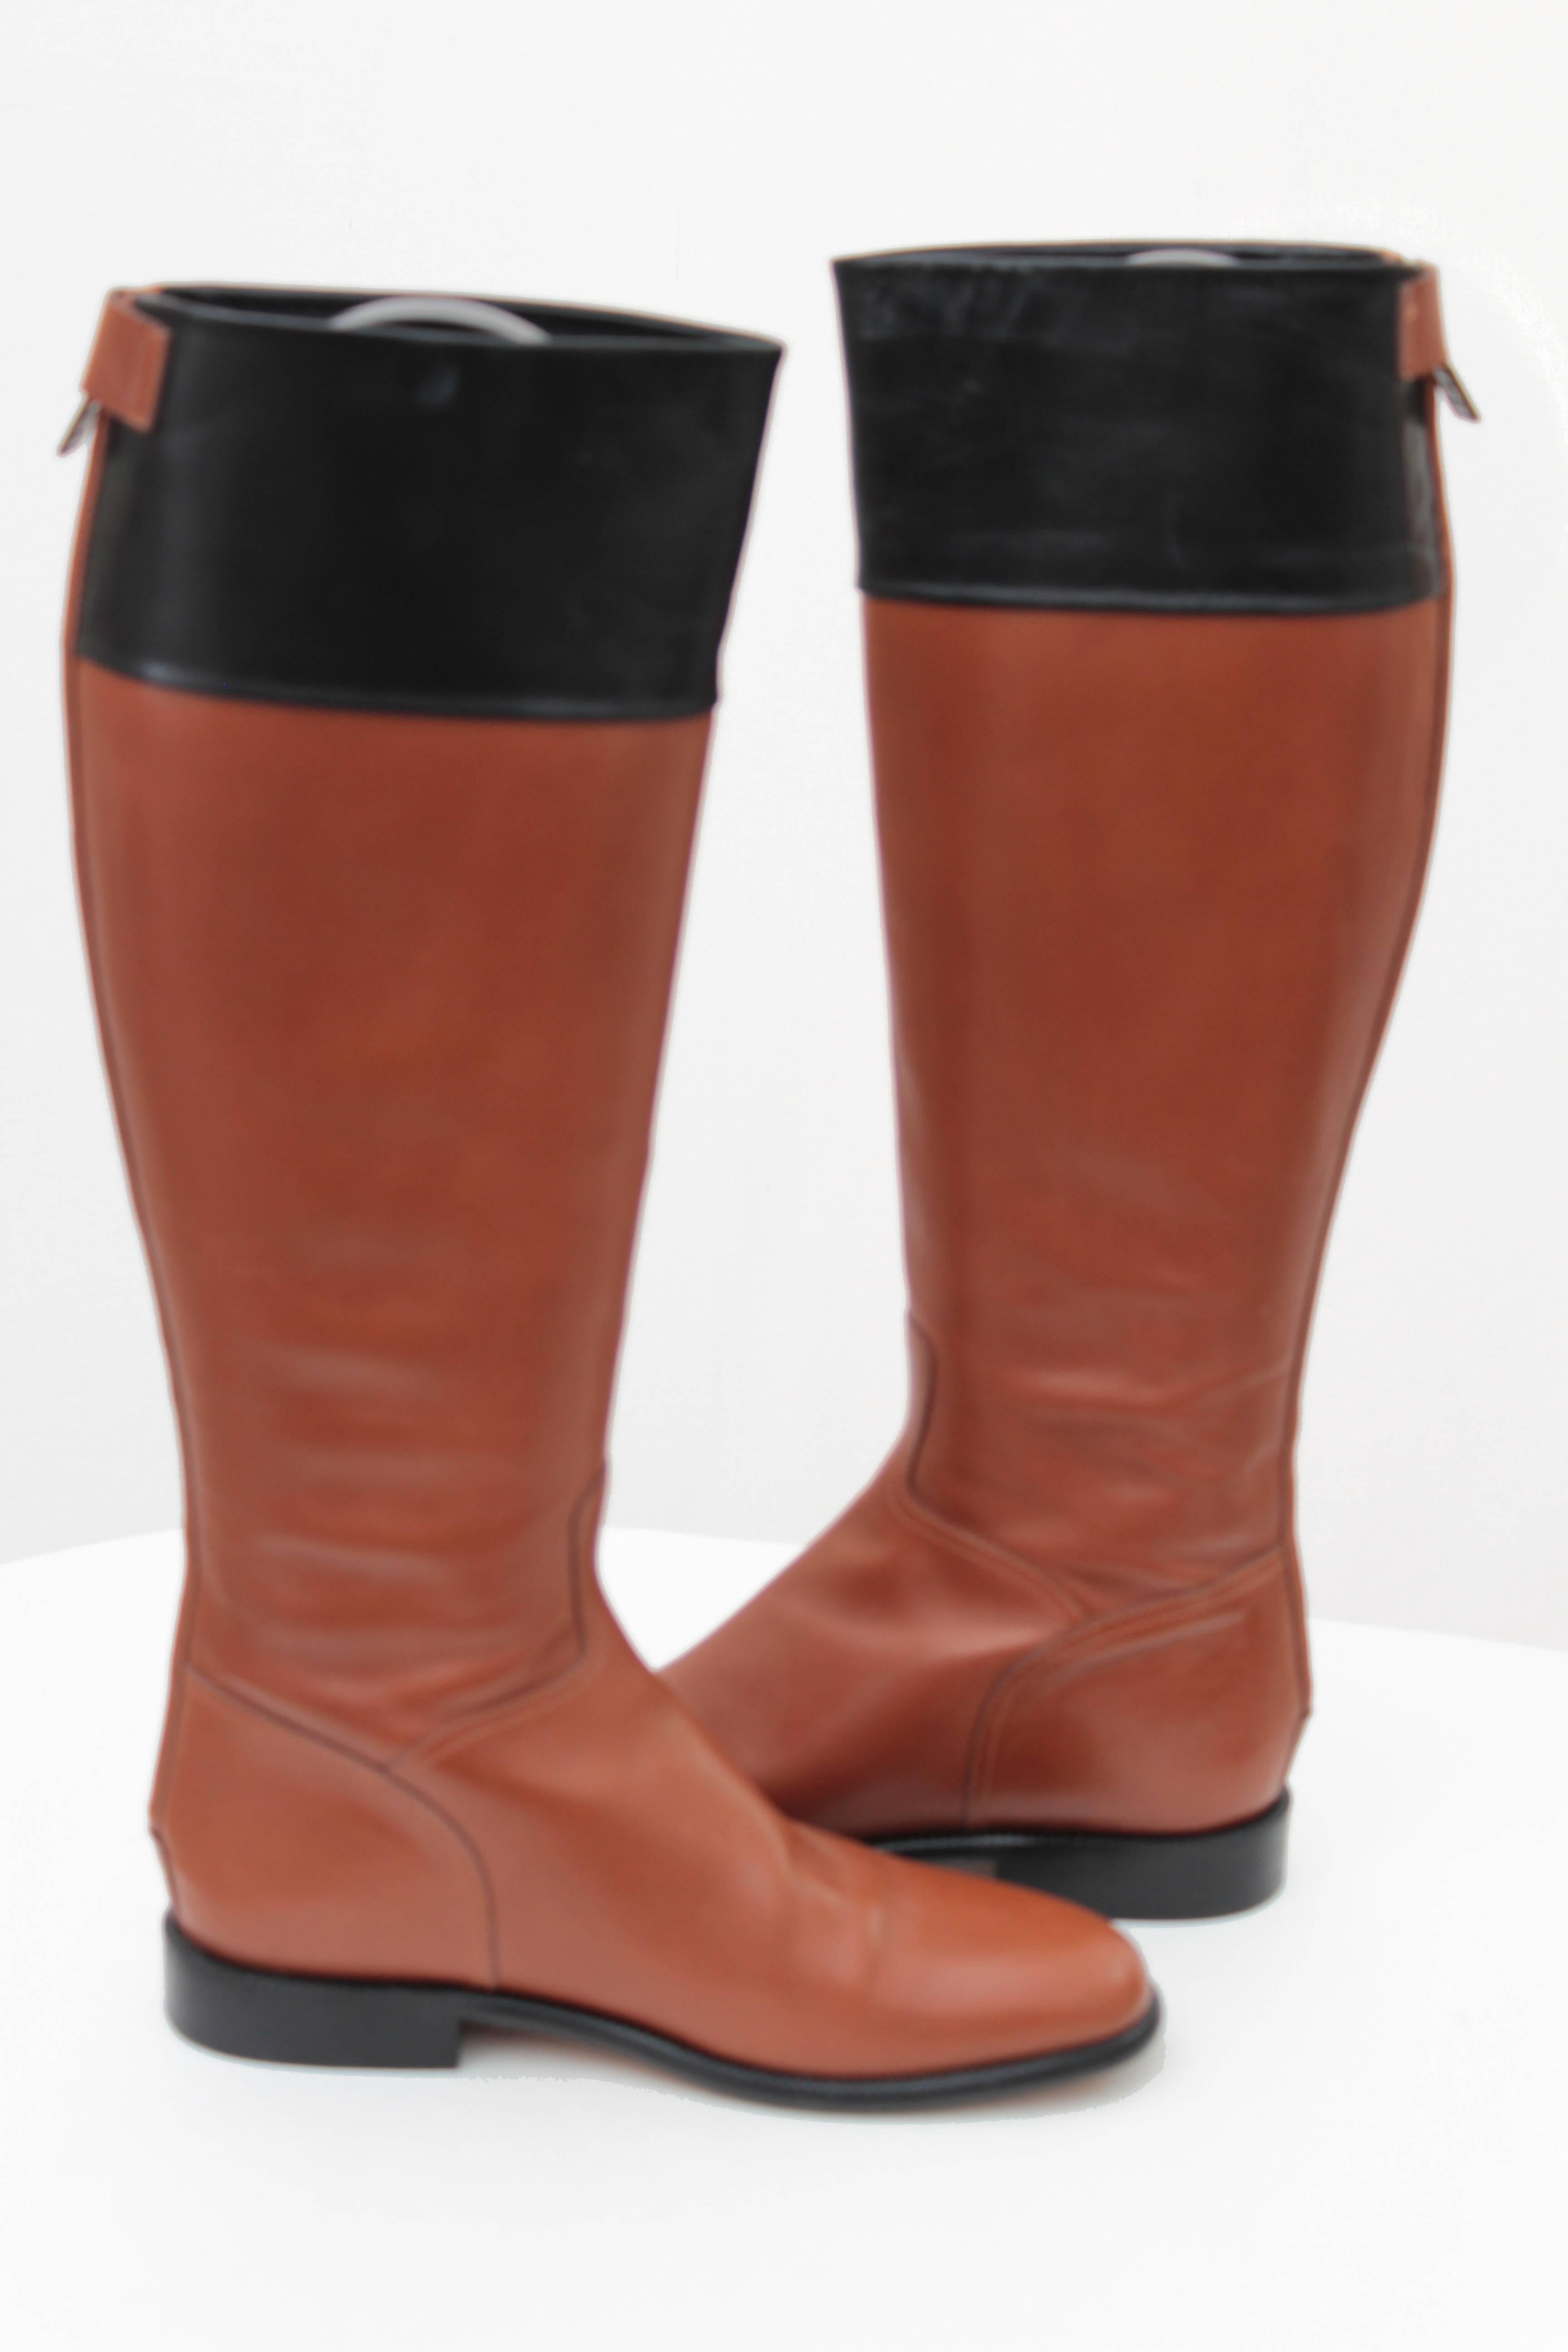 Women's Chanel Tan & Black Leather Riding Boots Knee High CC logo Equestrian sz 39 + Box